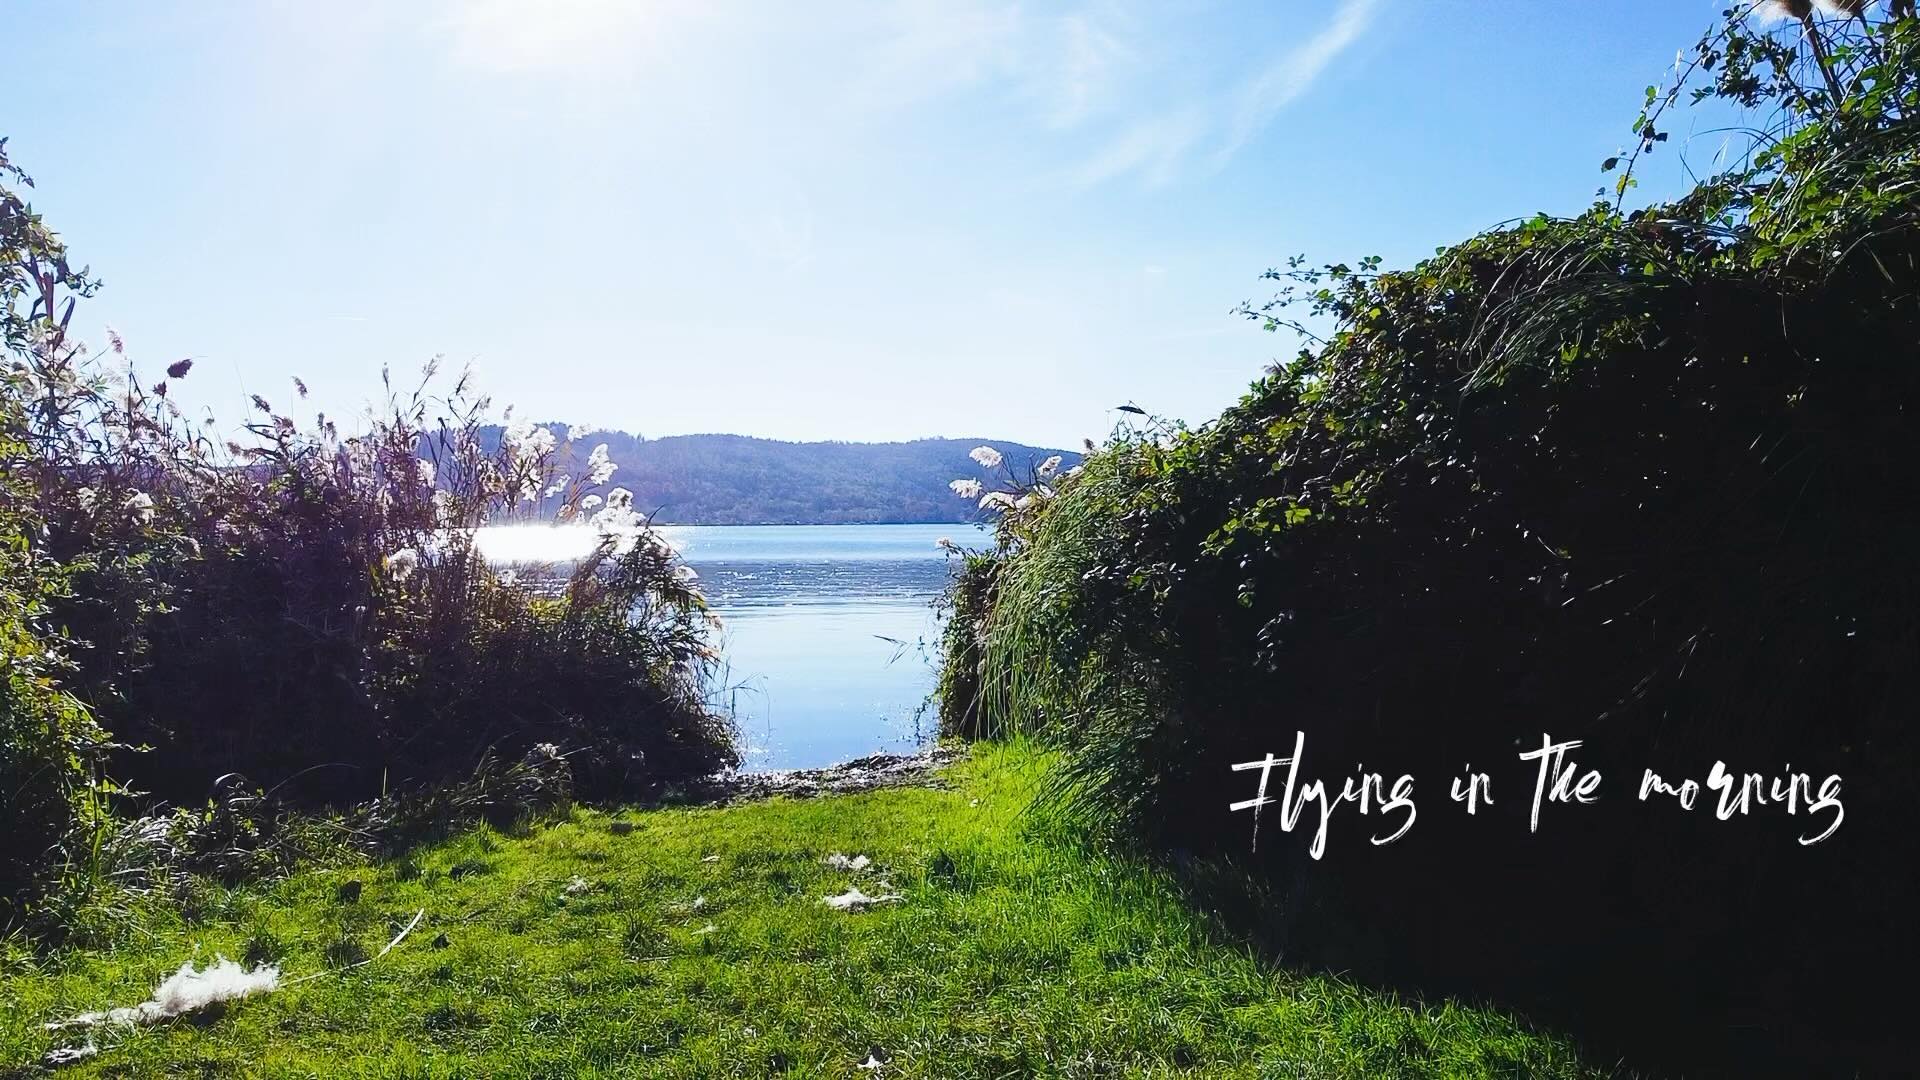 Flying in the morning - Lago di Comabbio 

#djiglobal #djimini2 #drone #dronephotography #lake #comabbio #ternate #lagodicomabbio #novembre  #lombardia #varese #vareseturismo @lagodicomabbio  @pistaciclopedonalelagocomabbio @varesenews